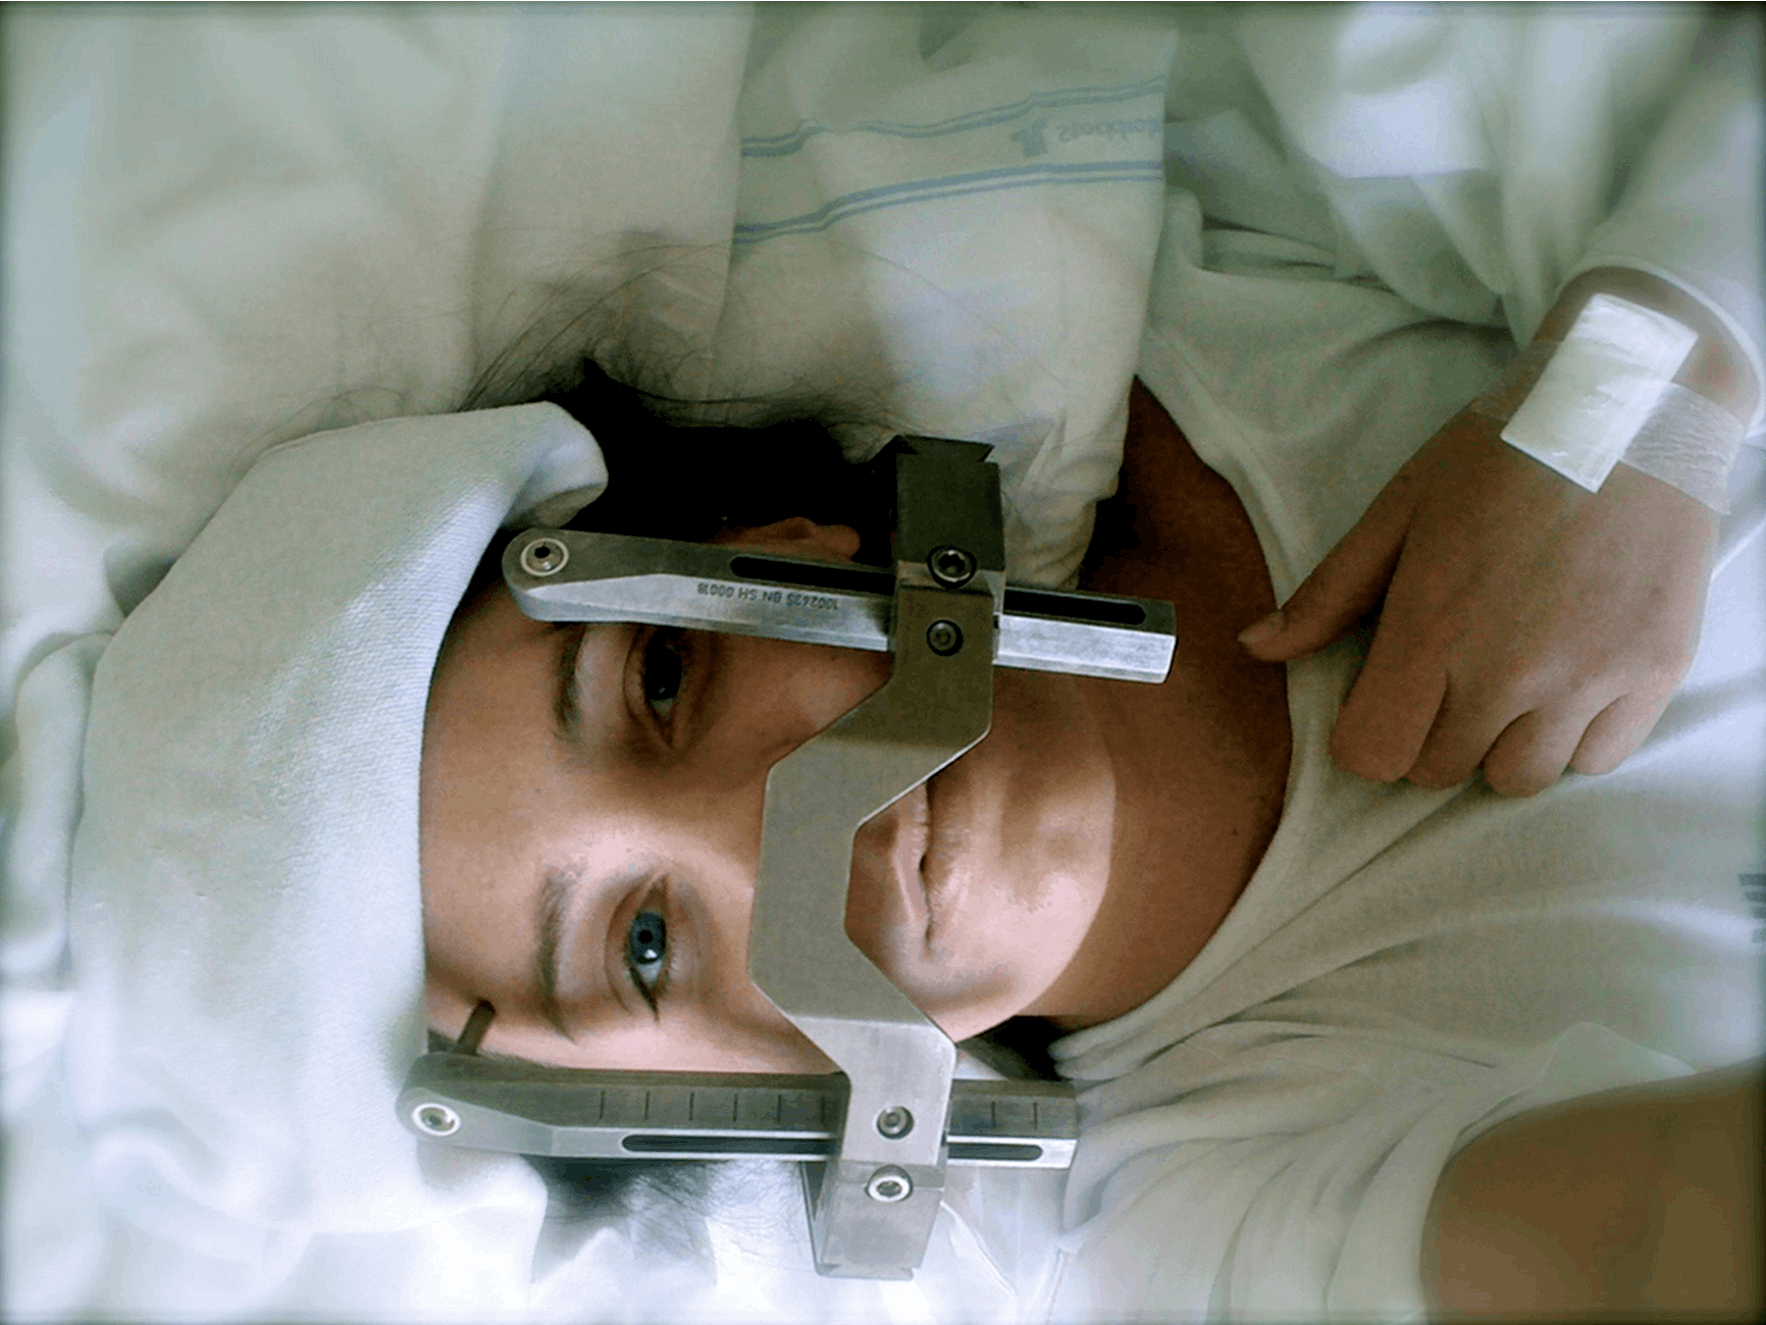 Petra fik skruet et stålstativ fast på kraniet for at holde det helt stille, mens hun blev behandlet med stråling.